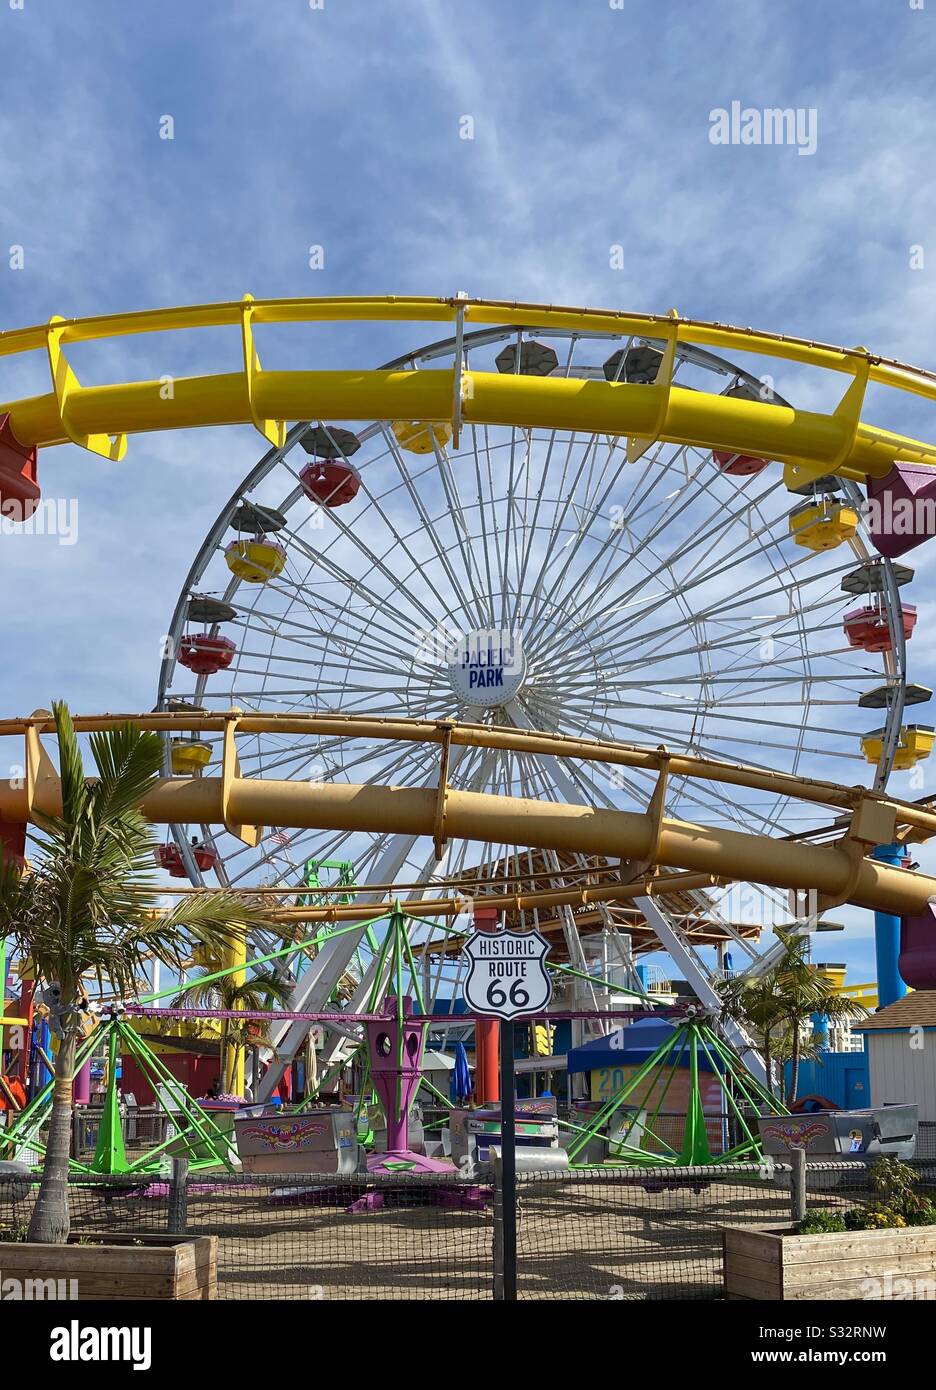 Pacific Park amusement rides in Los Angeles, California on Santa Monica Pier Stock Photo